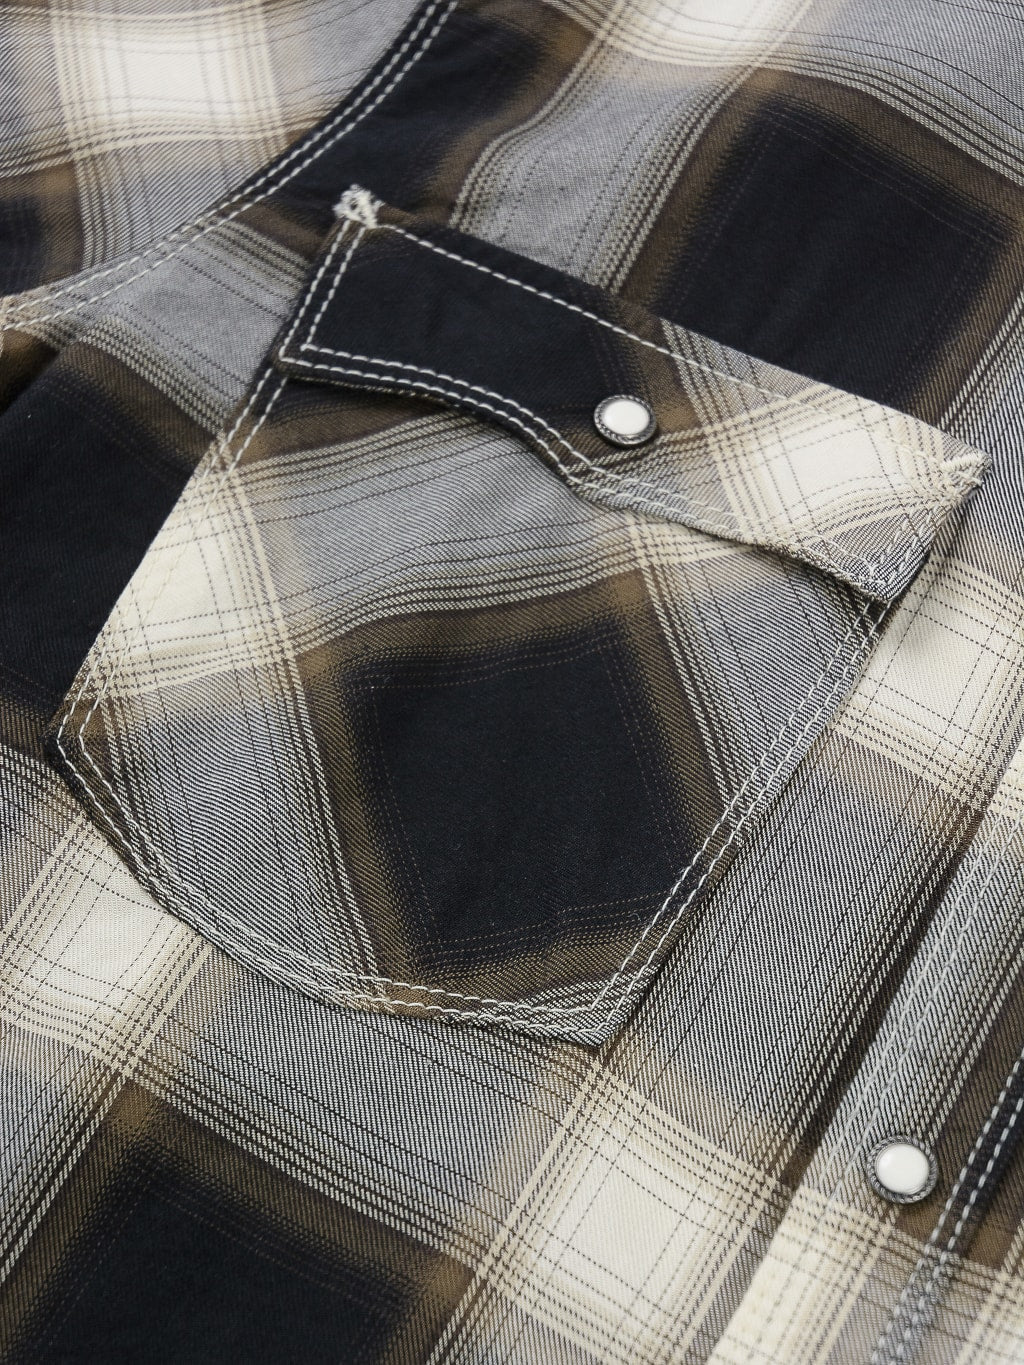 Freenote Cloth Lancaster Black Shadow Plaid Shirt made in USA